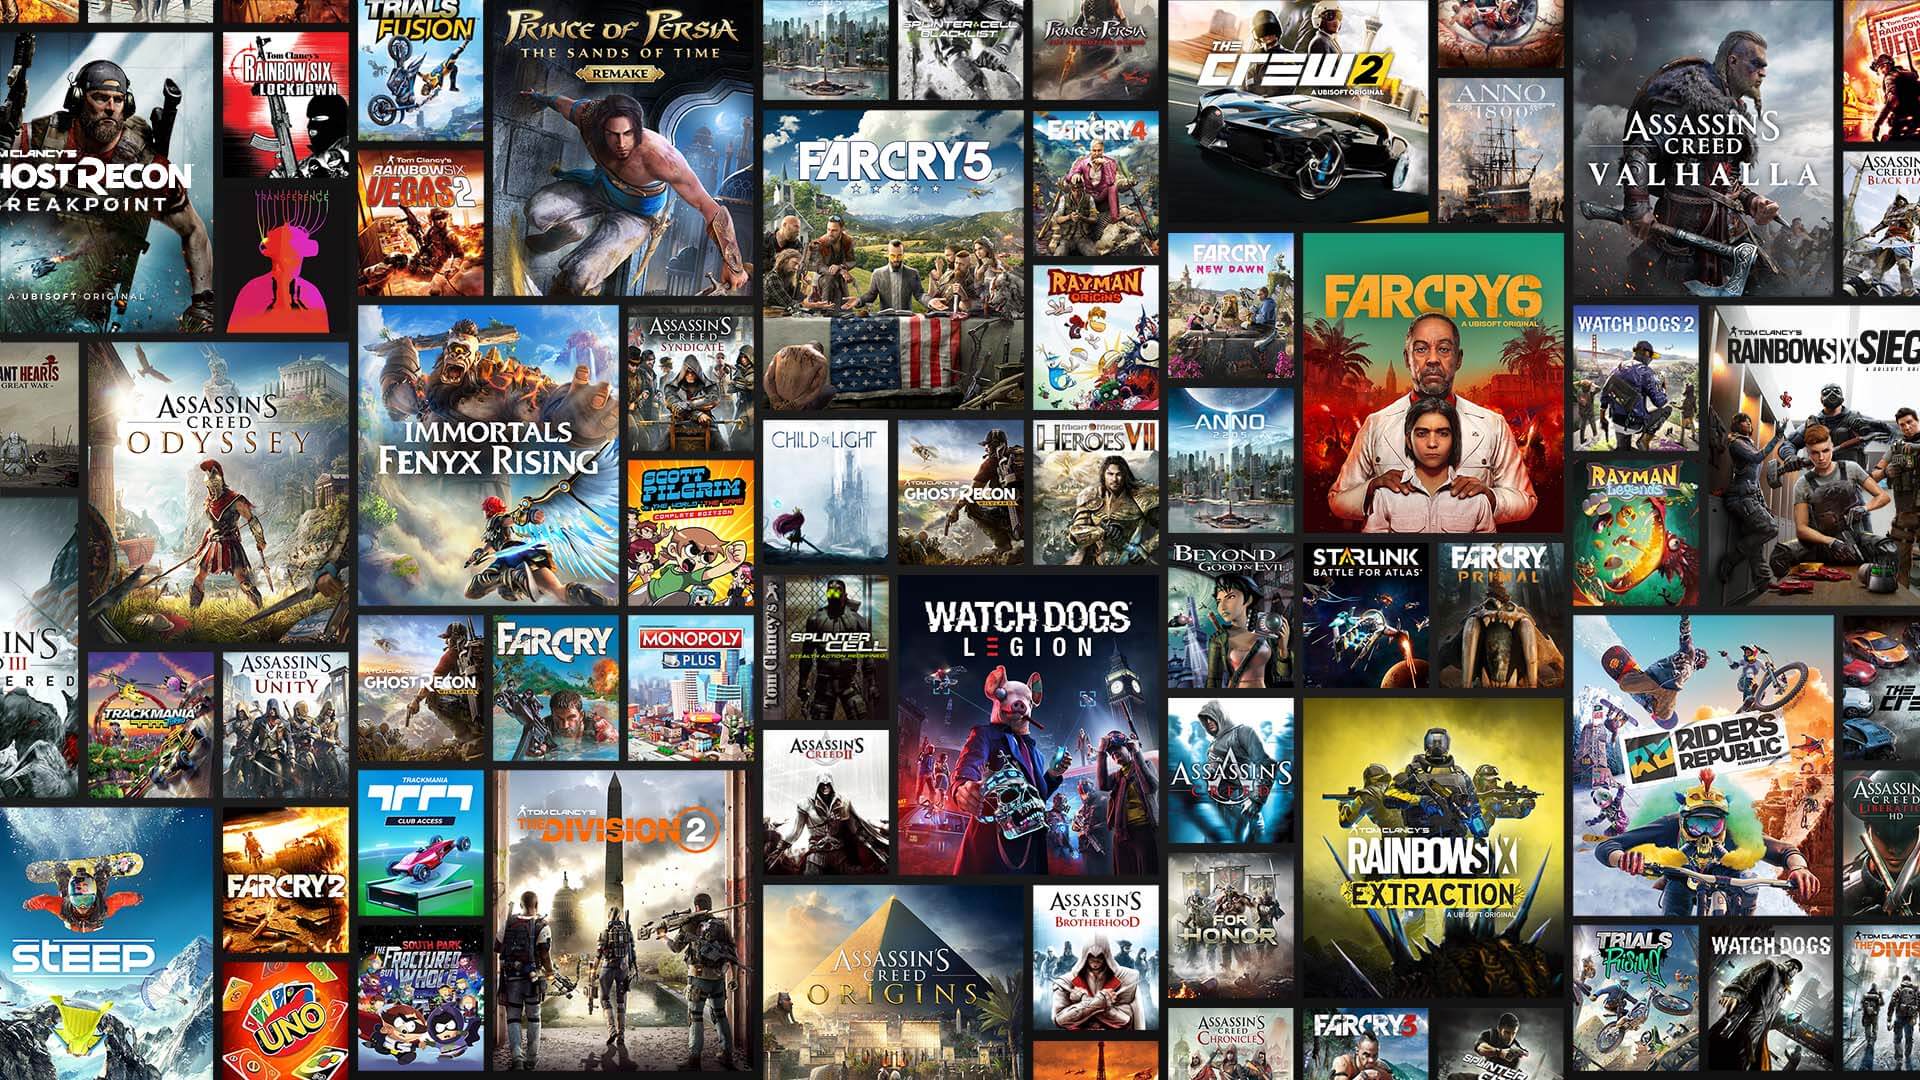 A range of Ubisoft games